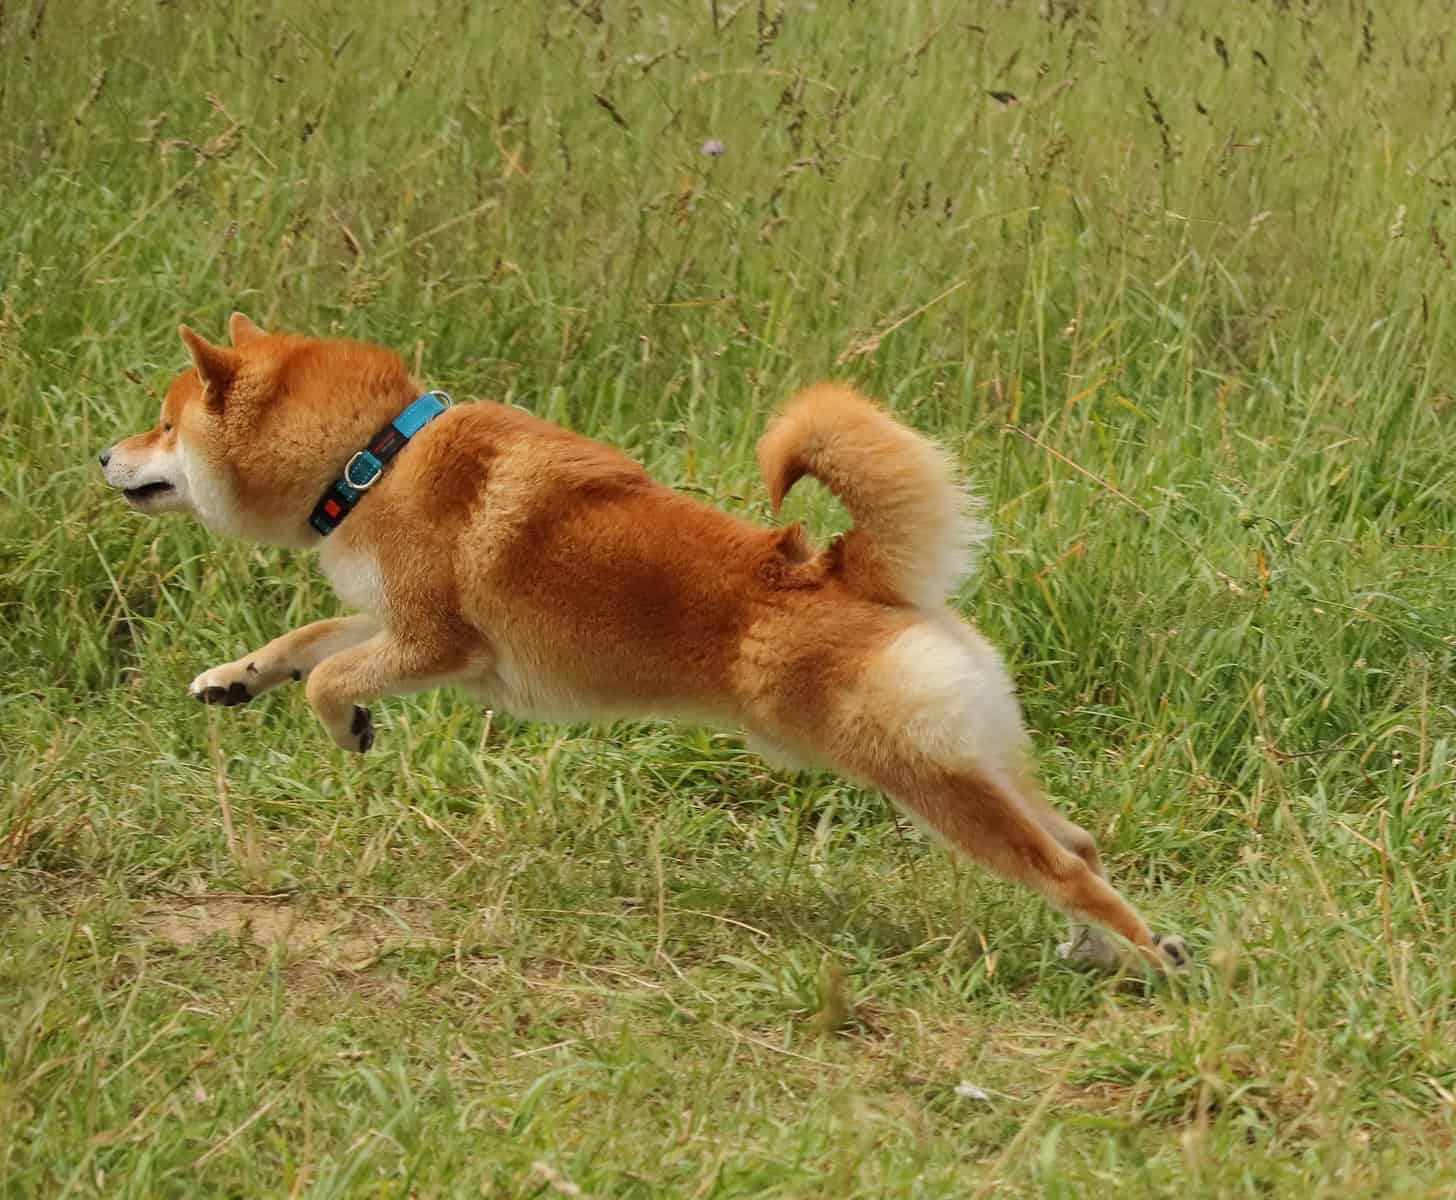 the-dog-runs-on-the-grass